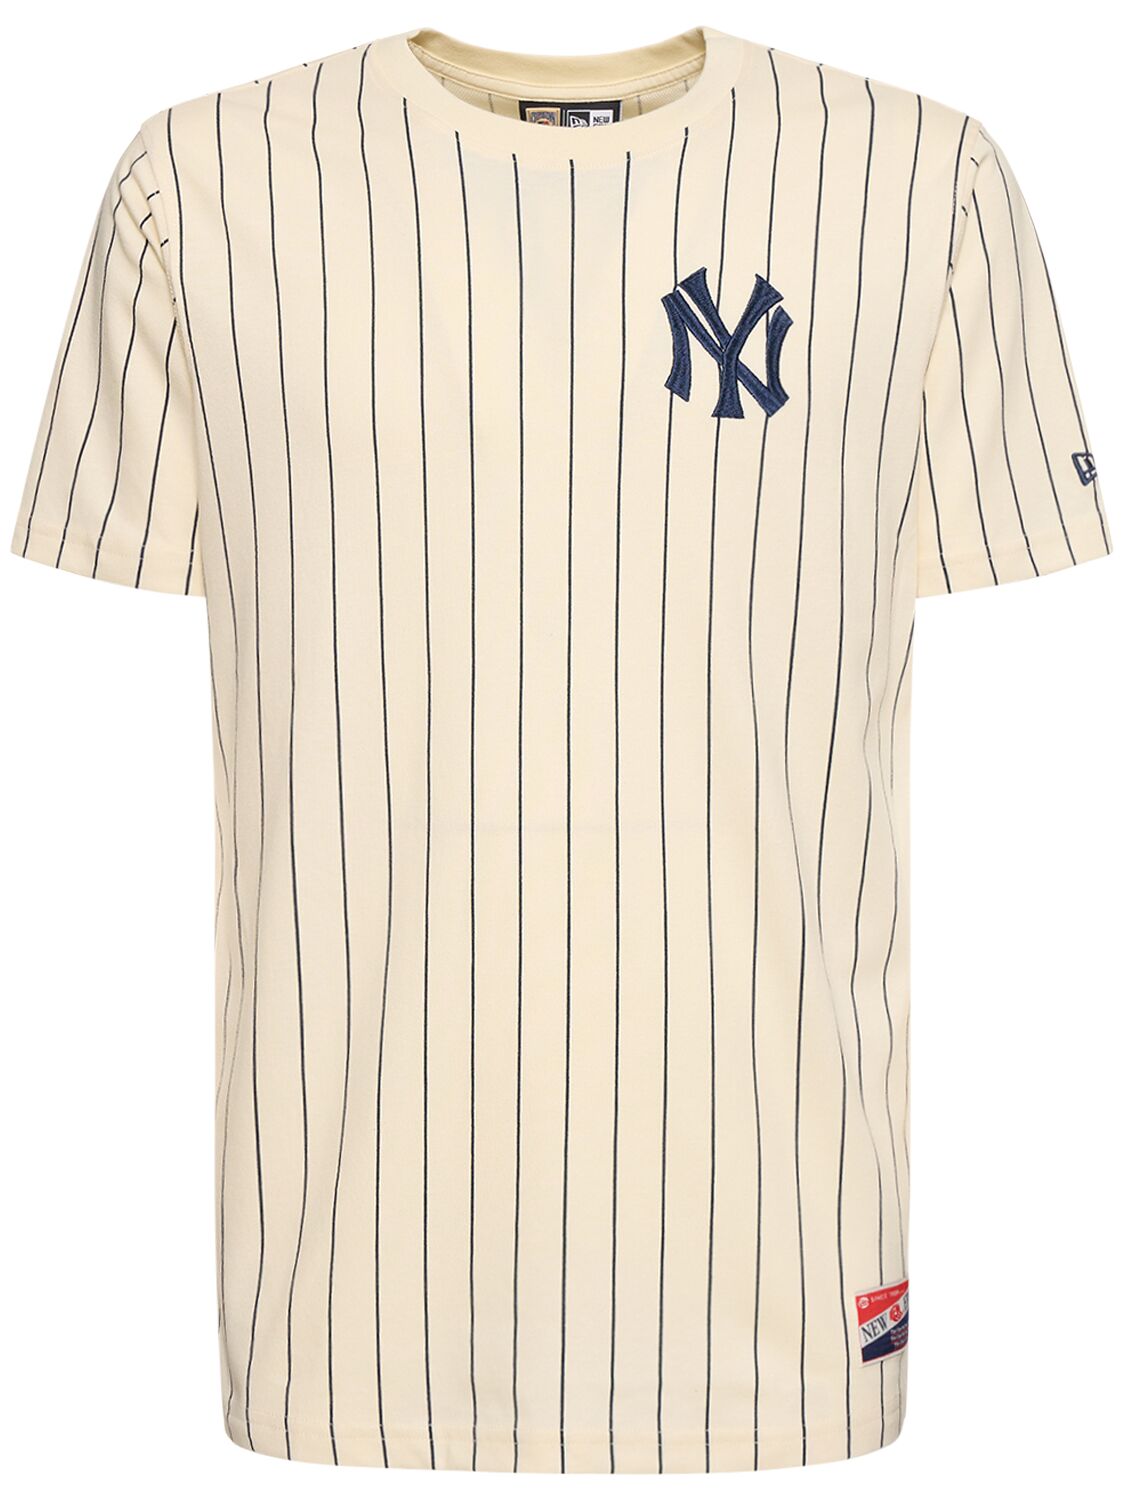 Cooperstown New York Yankees T-shirt